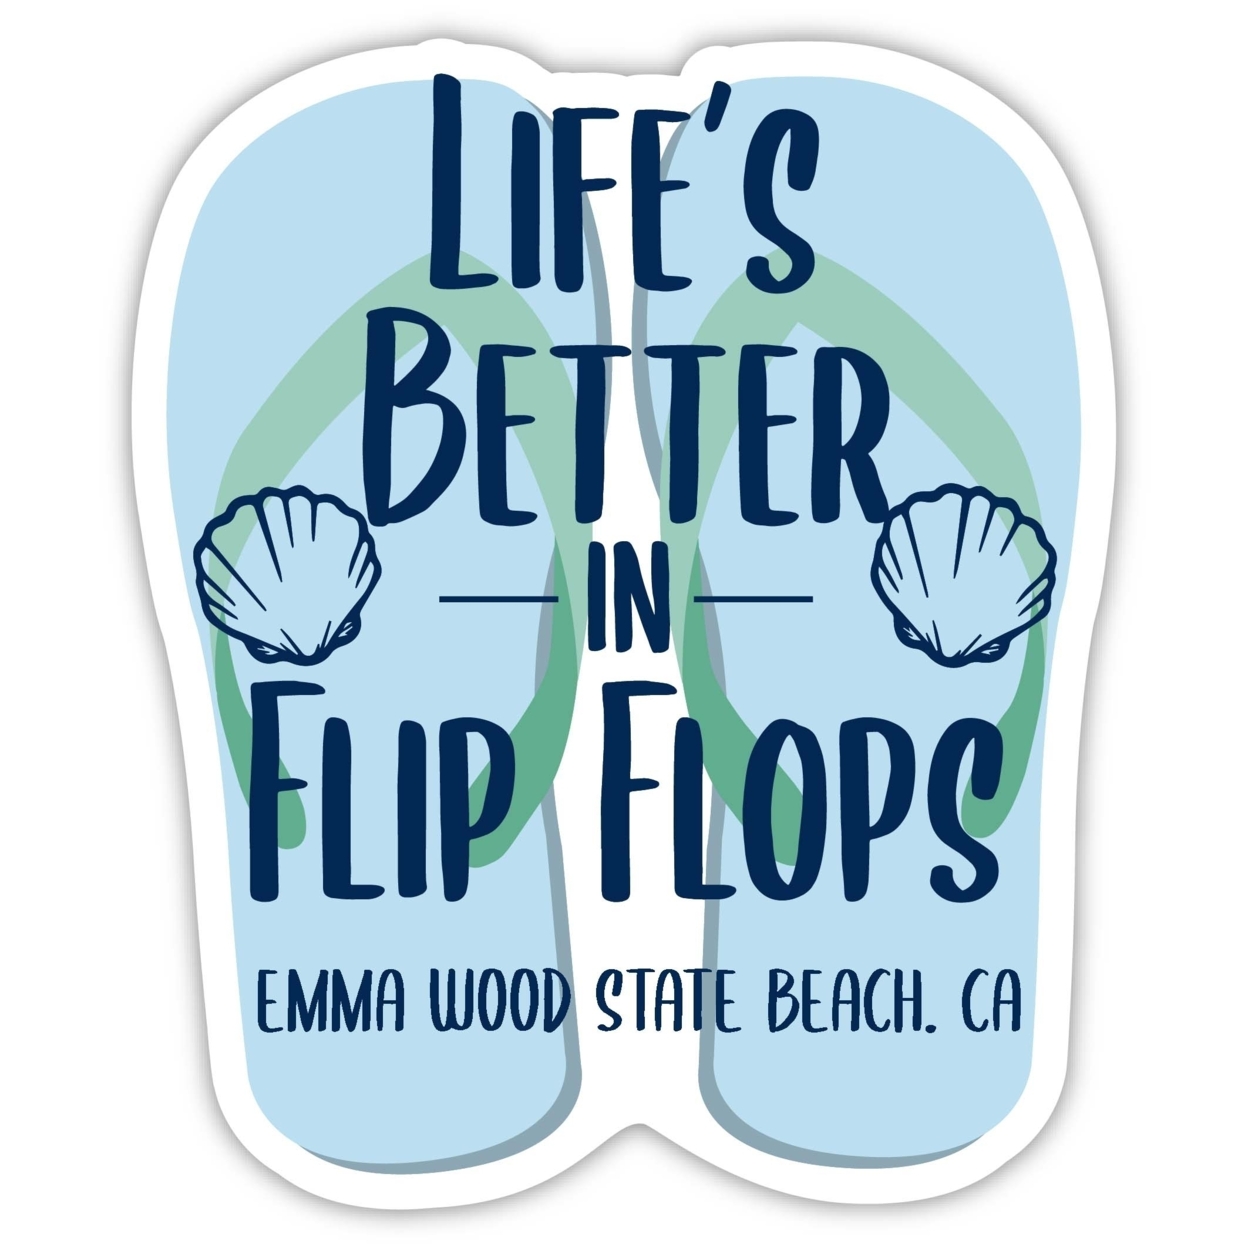 Emma Wood State Beach California Souvenir 4 Inch Vinyl Decal Sticker Flip Flop Design